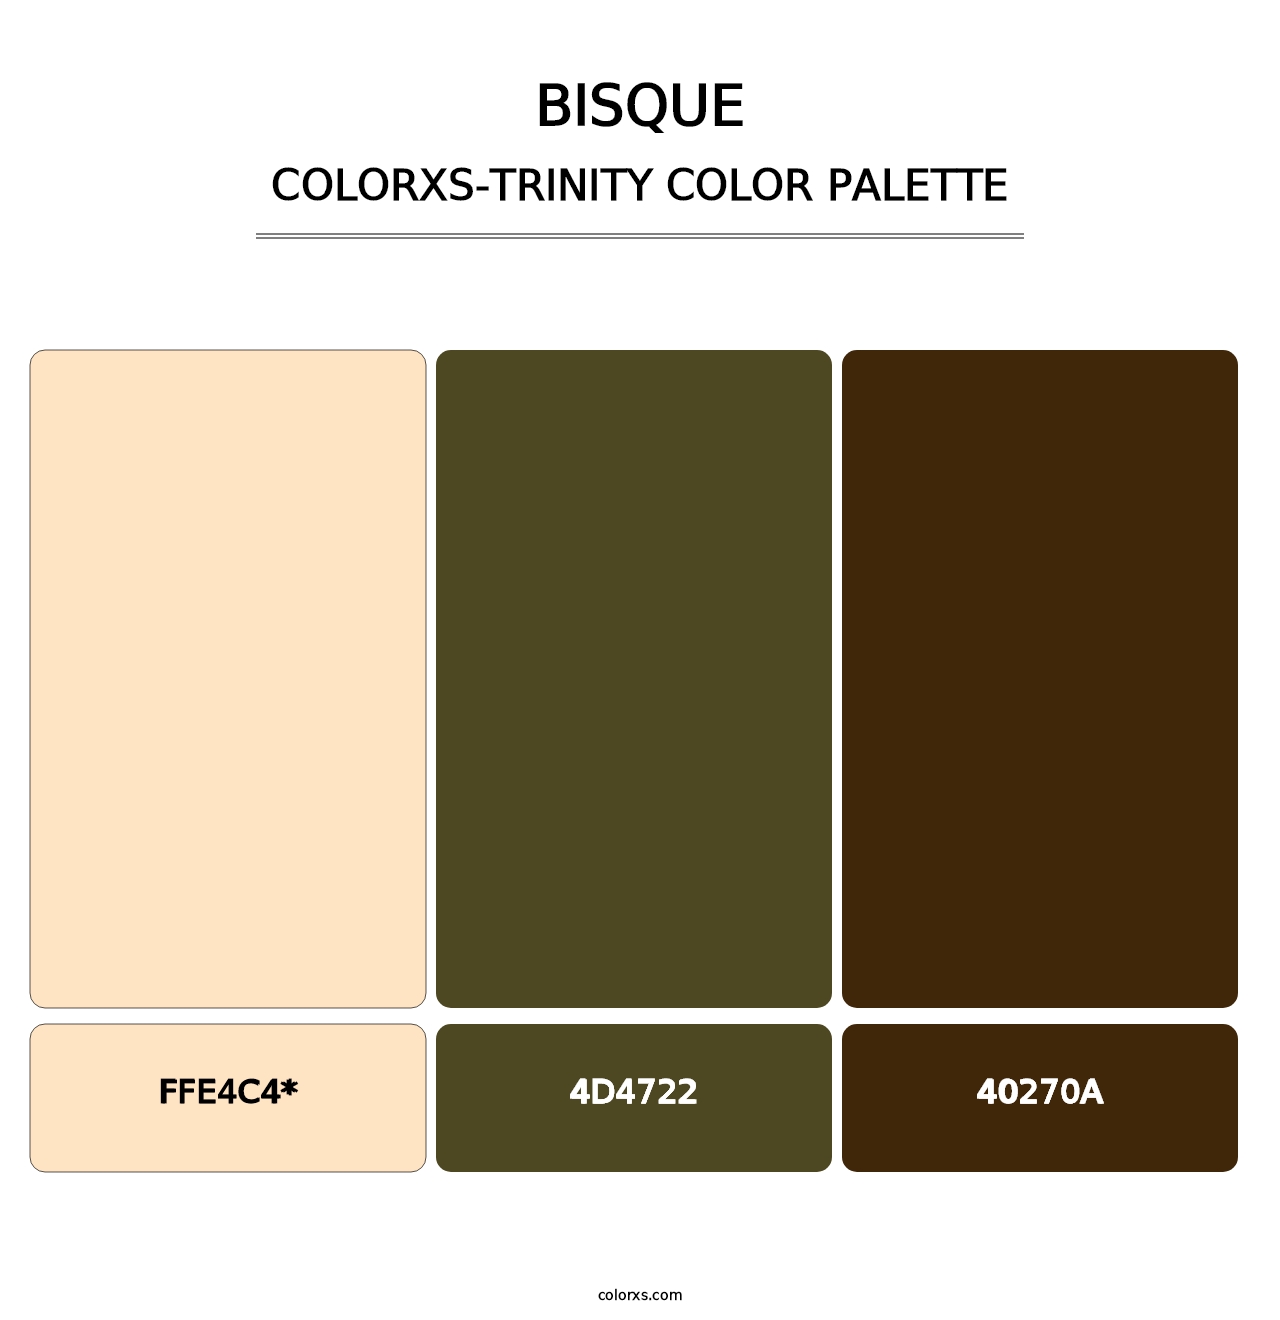 Bisque - Colorxs Trinity Palette